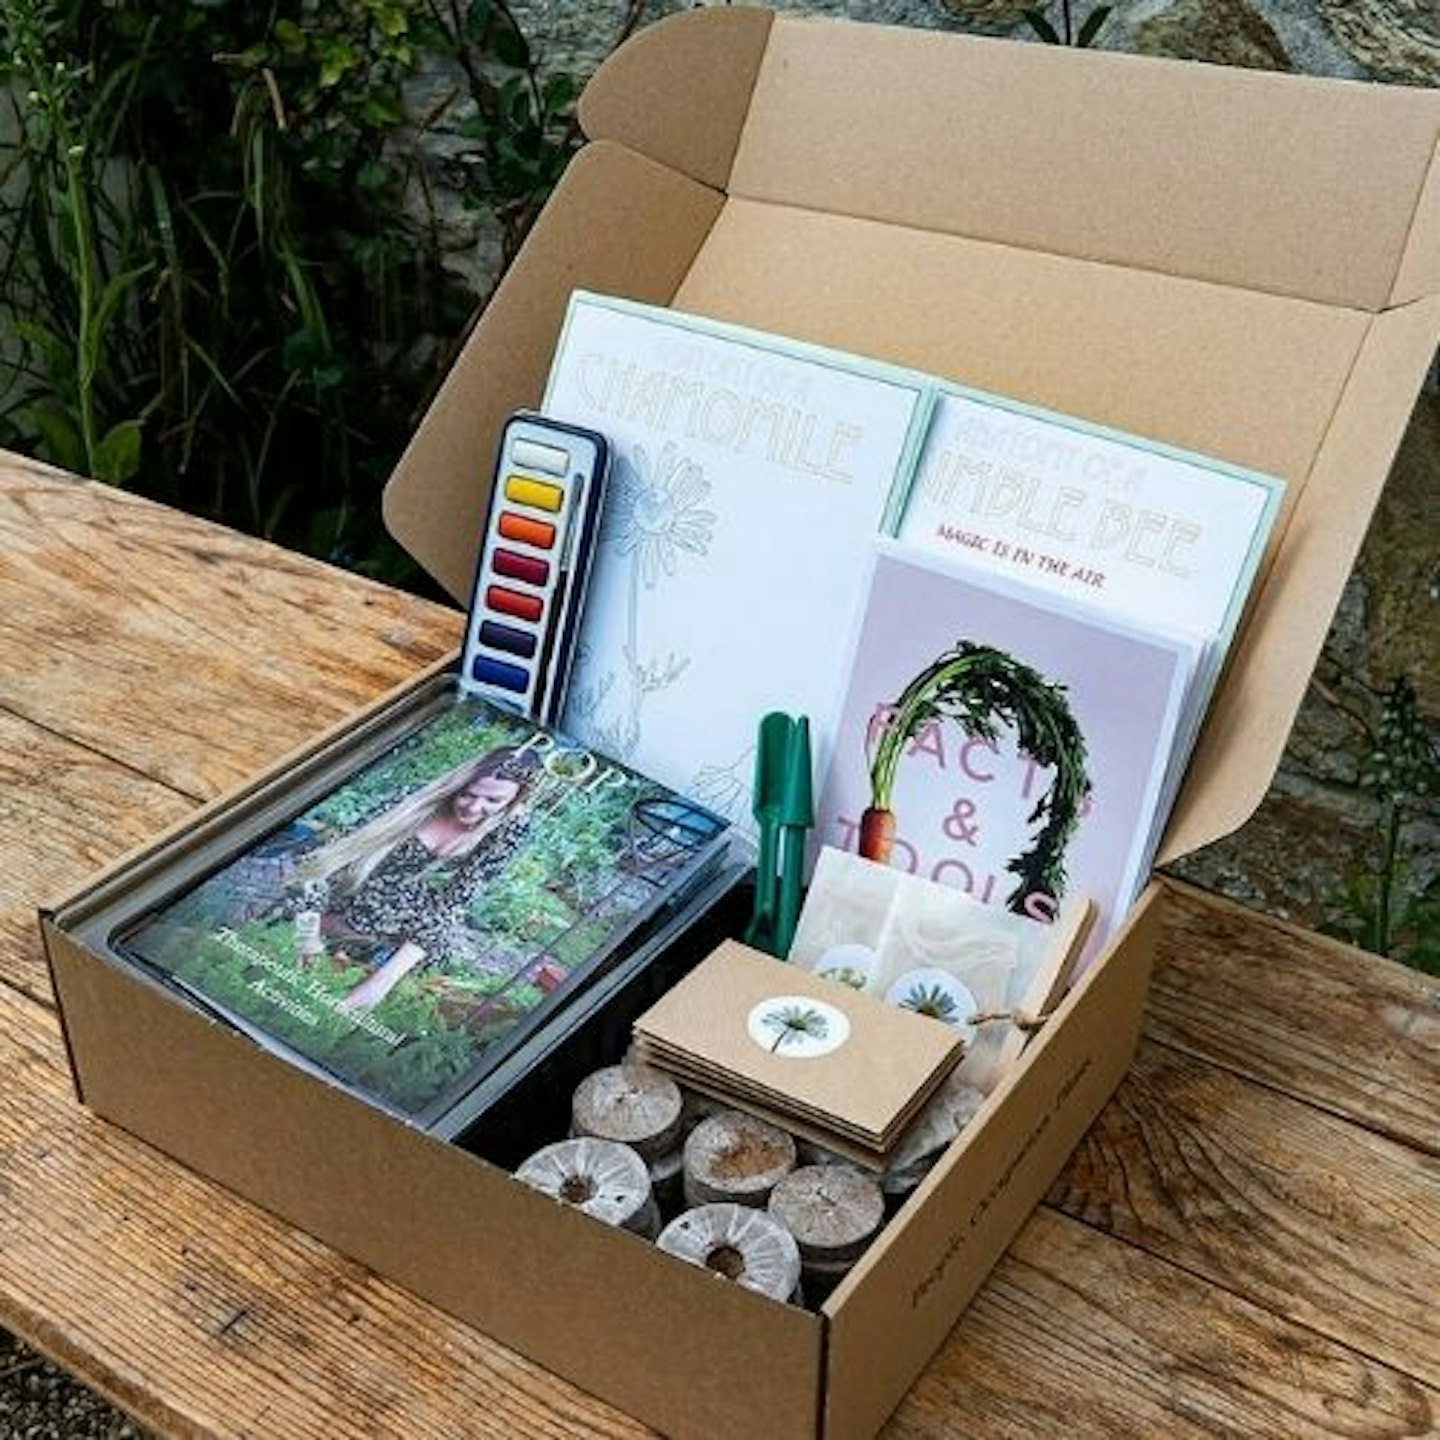 summer gardening and art wellbeing box